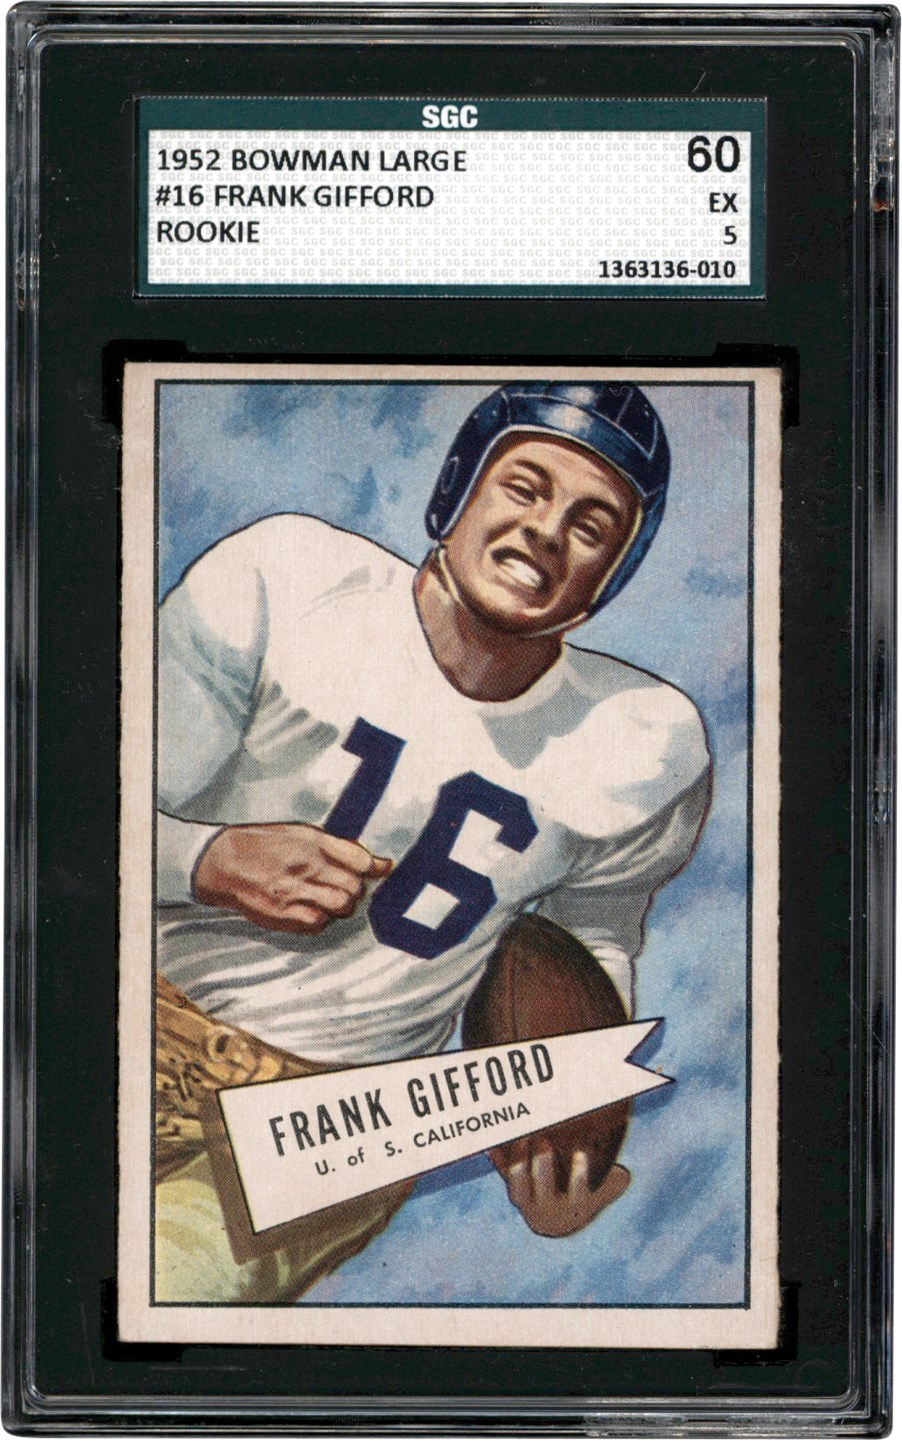 1952 Bowman Large Football #16 Frank Gifford Rookie Card SGC EX 5